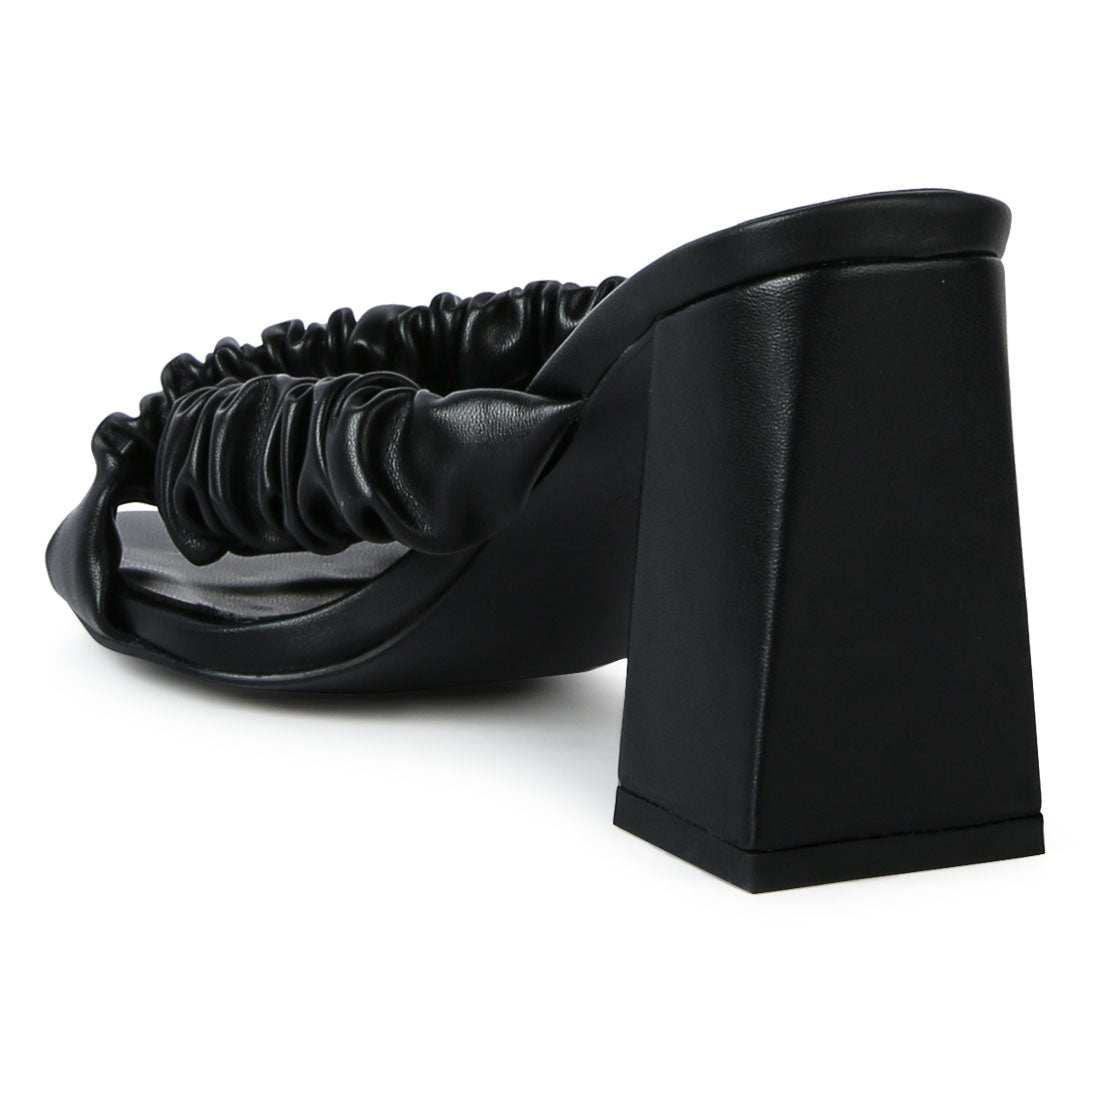 Strap Block Sandals in Black